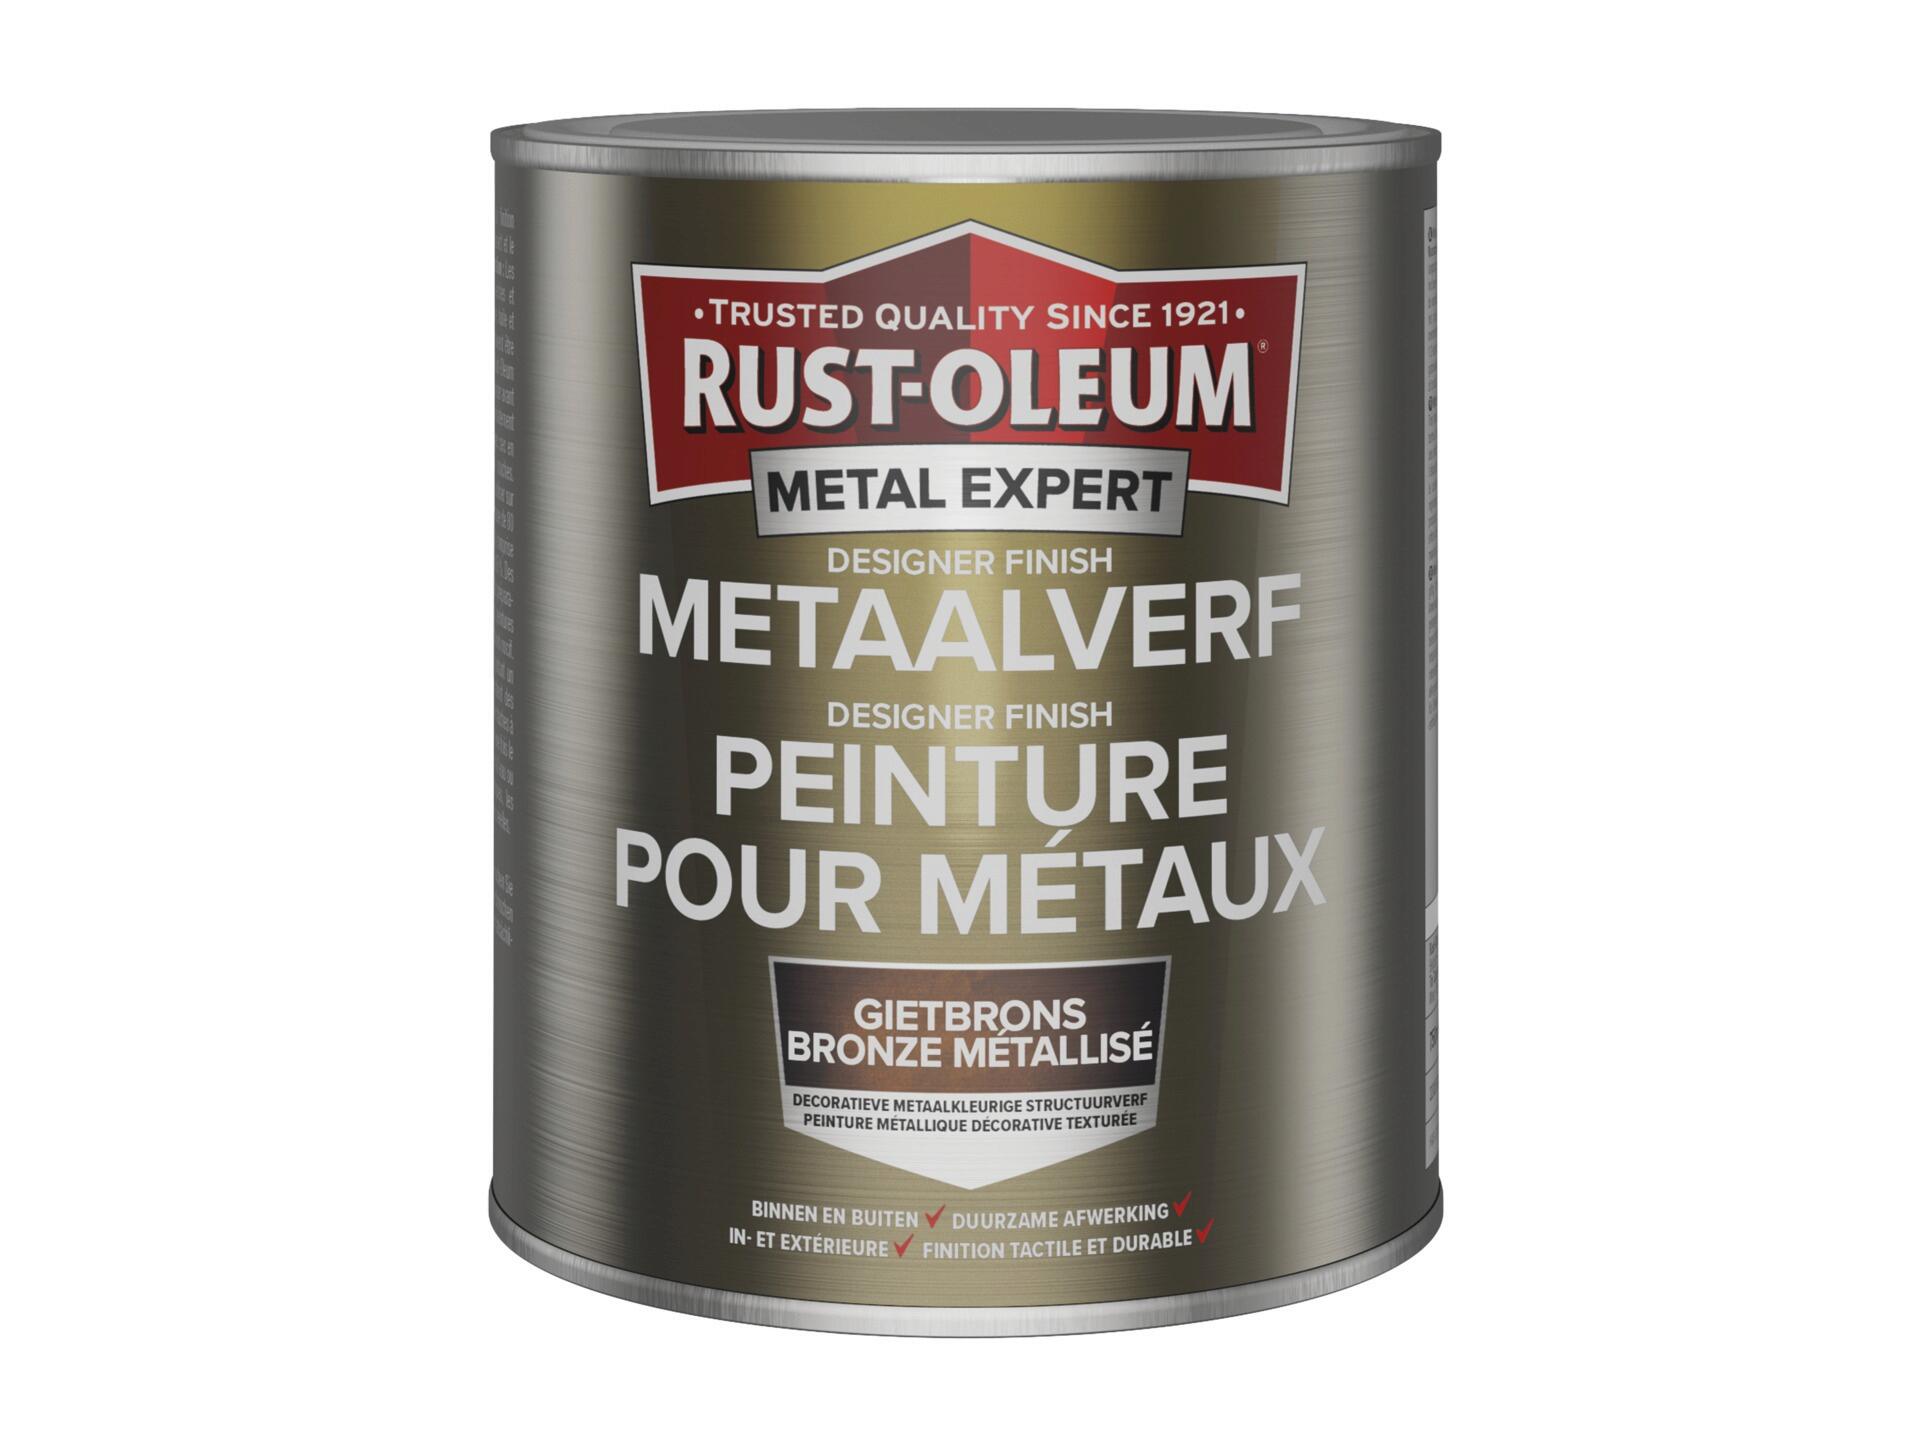 Rust-oleum Metal Expert Designer Finish metaalverf 750ml gietbrons